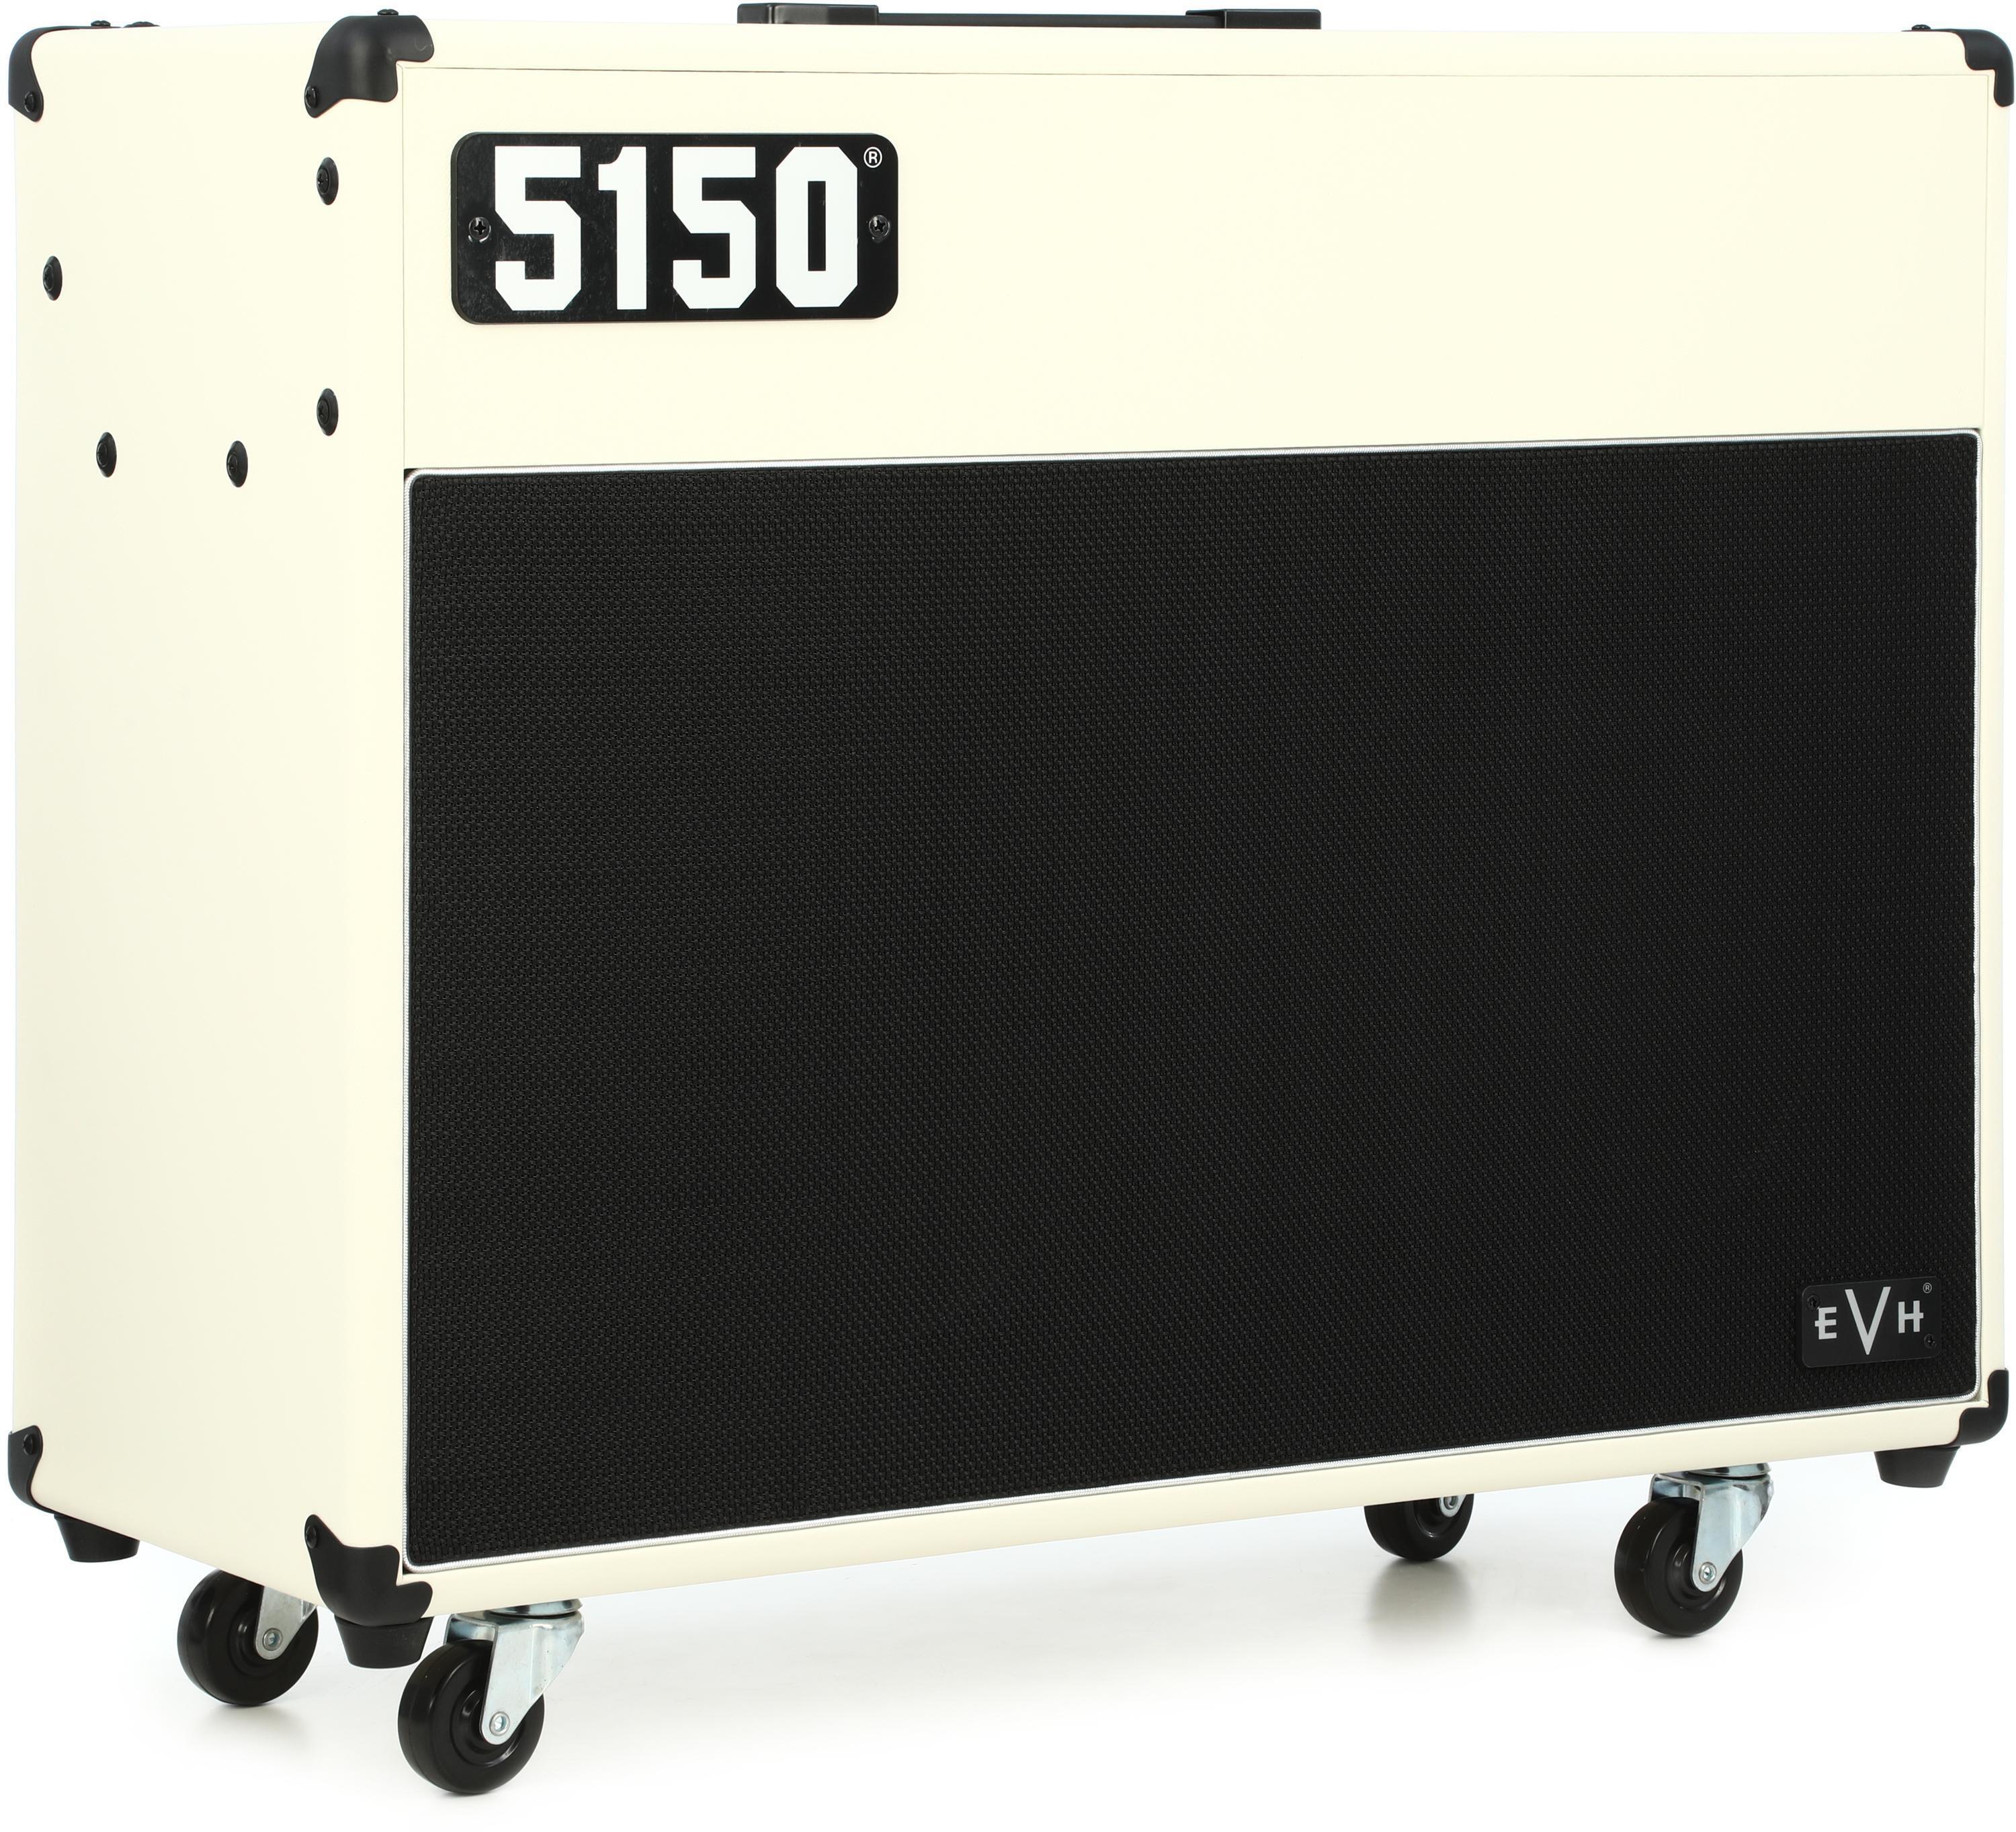 EVH 5150 Iconic Series 60-watt 2 x 12-inch Tube Combo Amp - Black